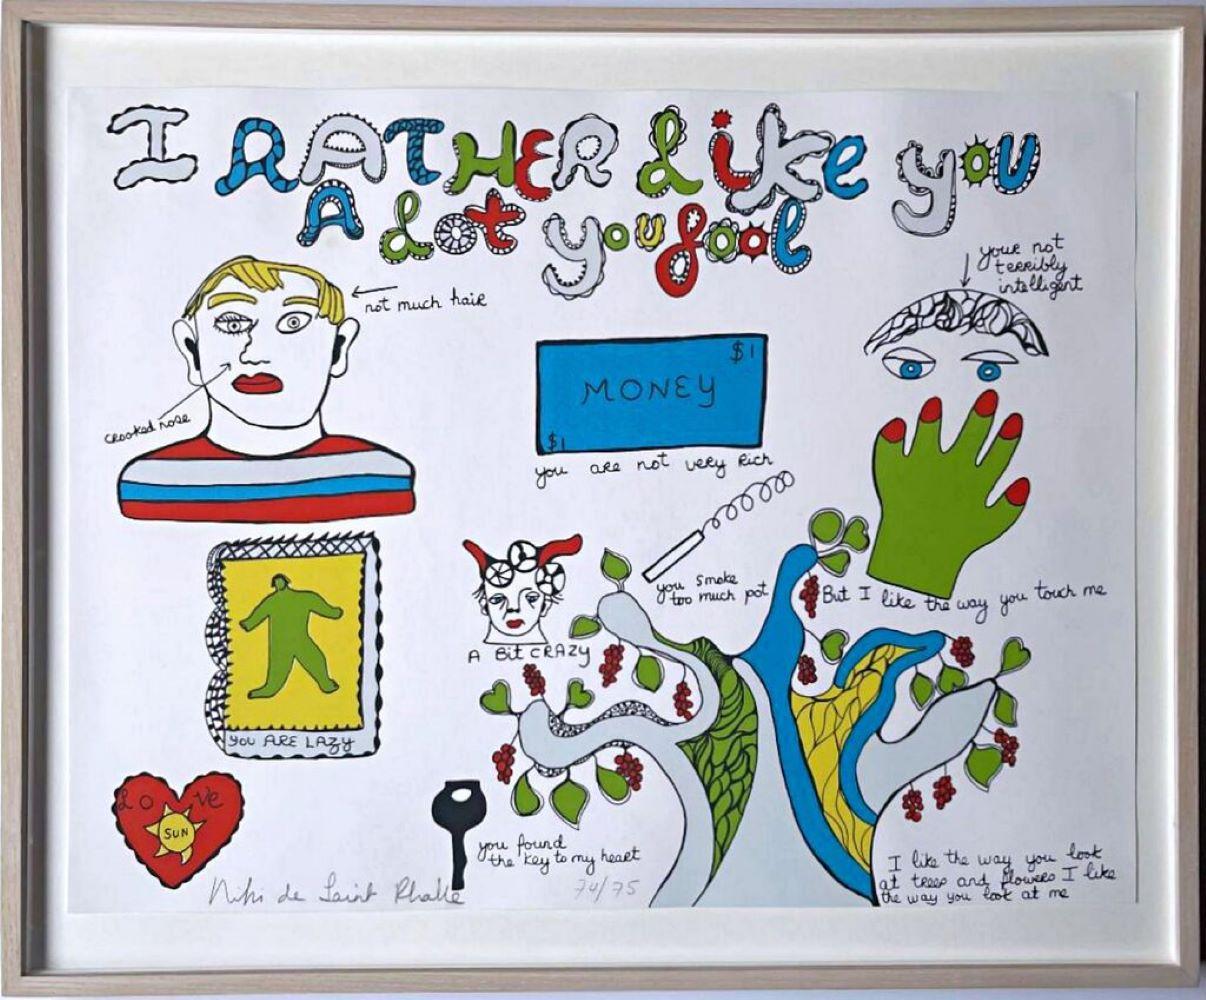 What art did Niki de Saint Phalle do?